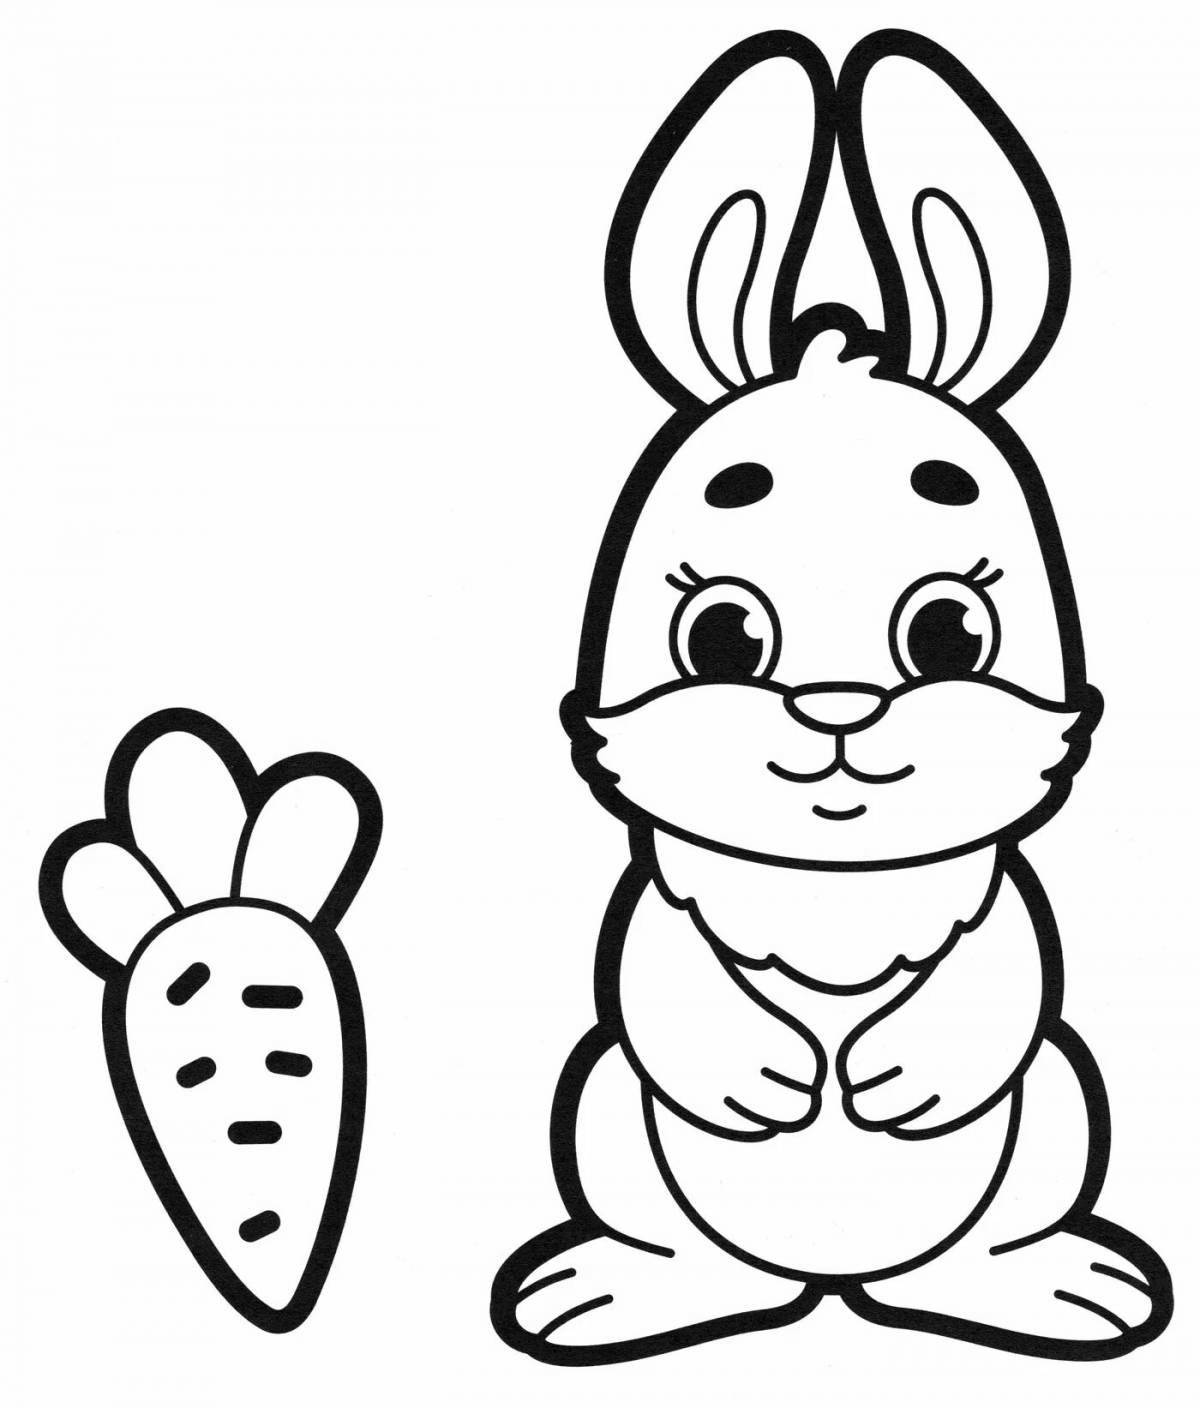 Carrot bunny #5